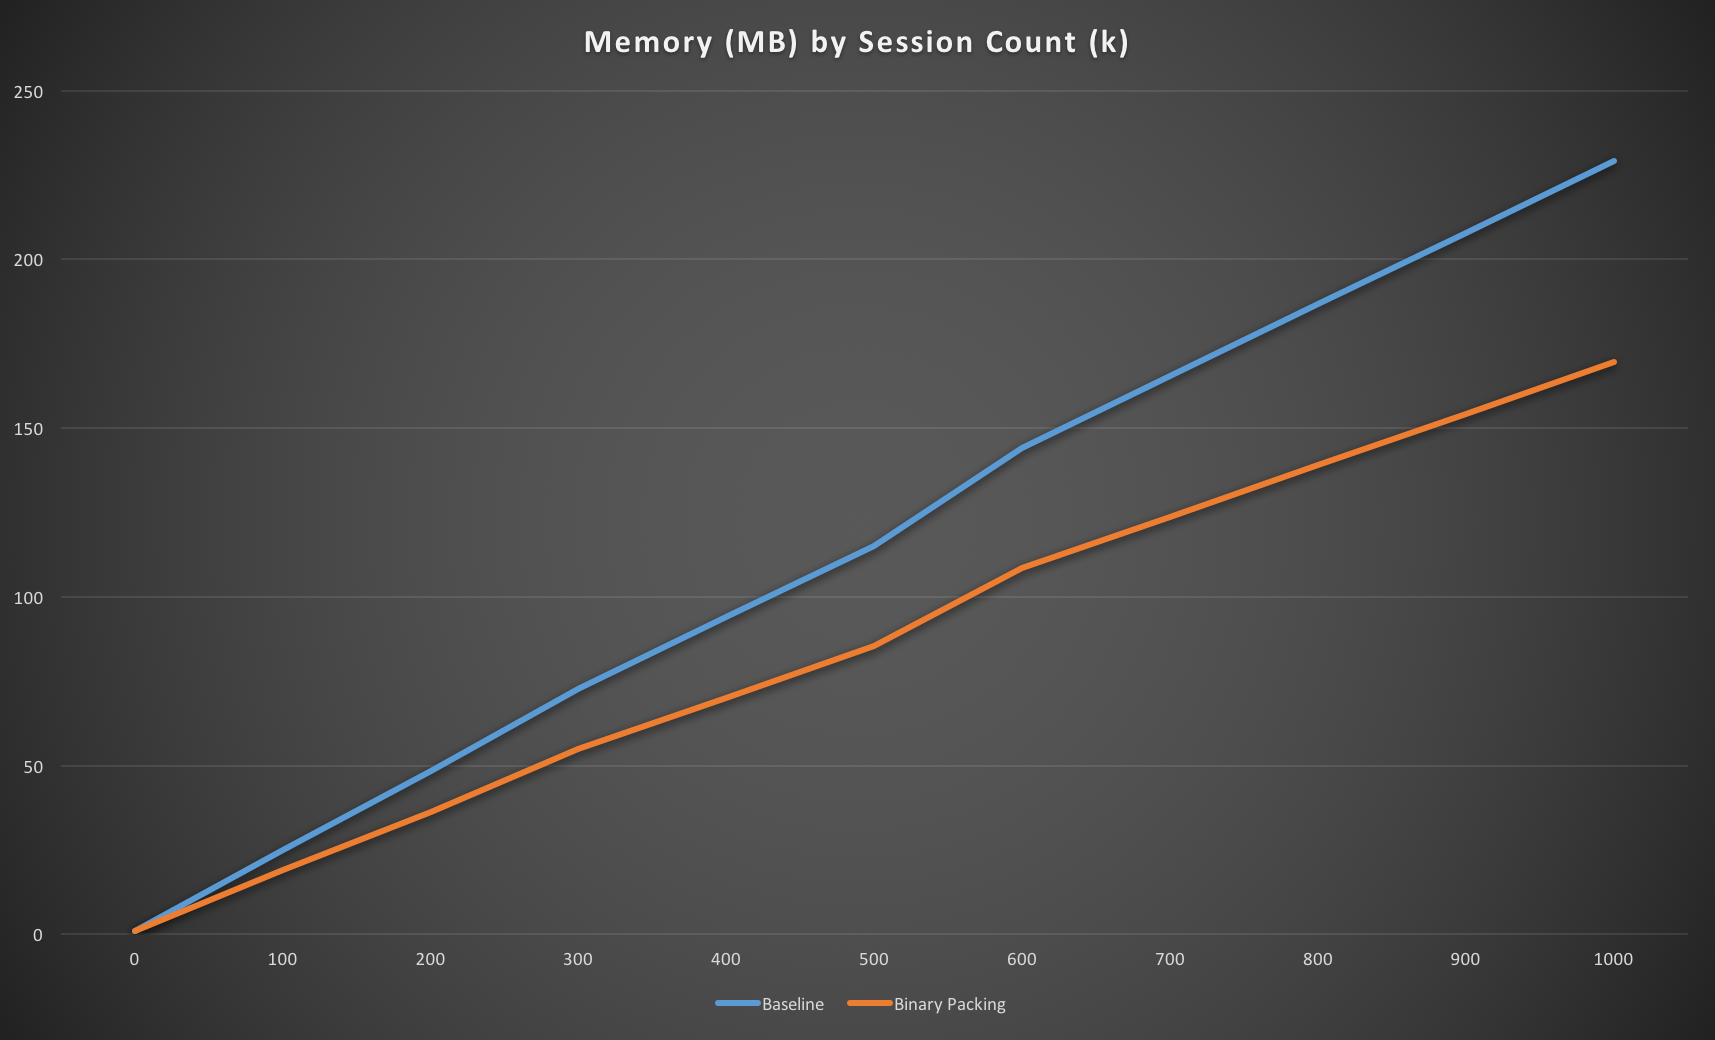 Binary packing memory usage